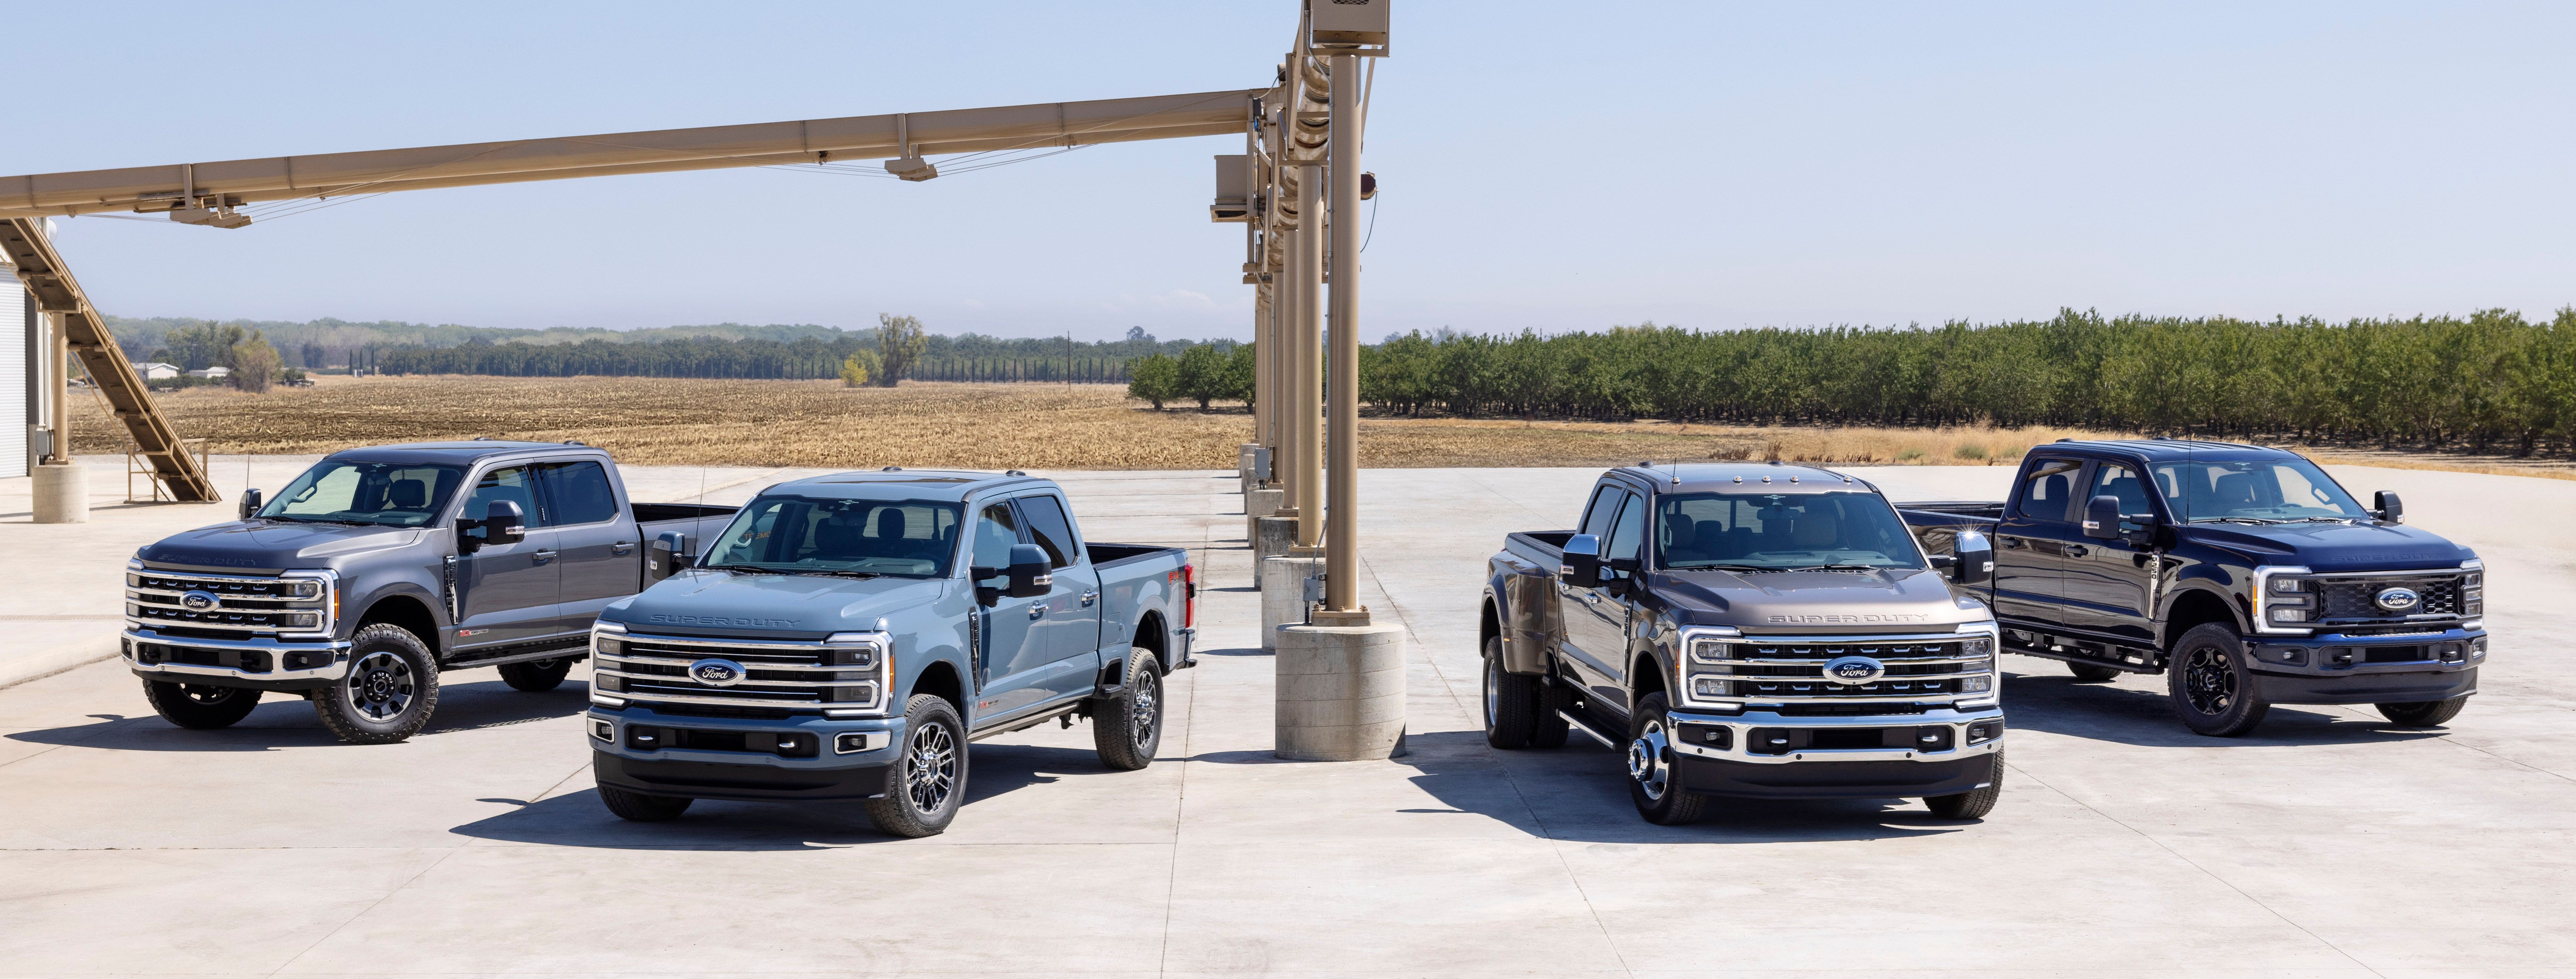 An Array of Ford Super Duty Trucks